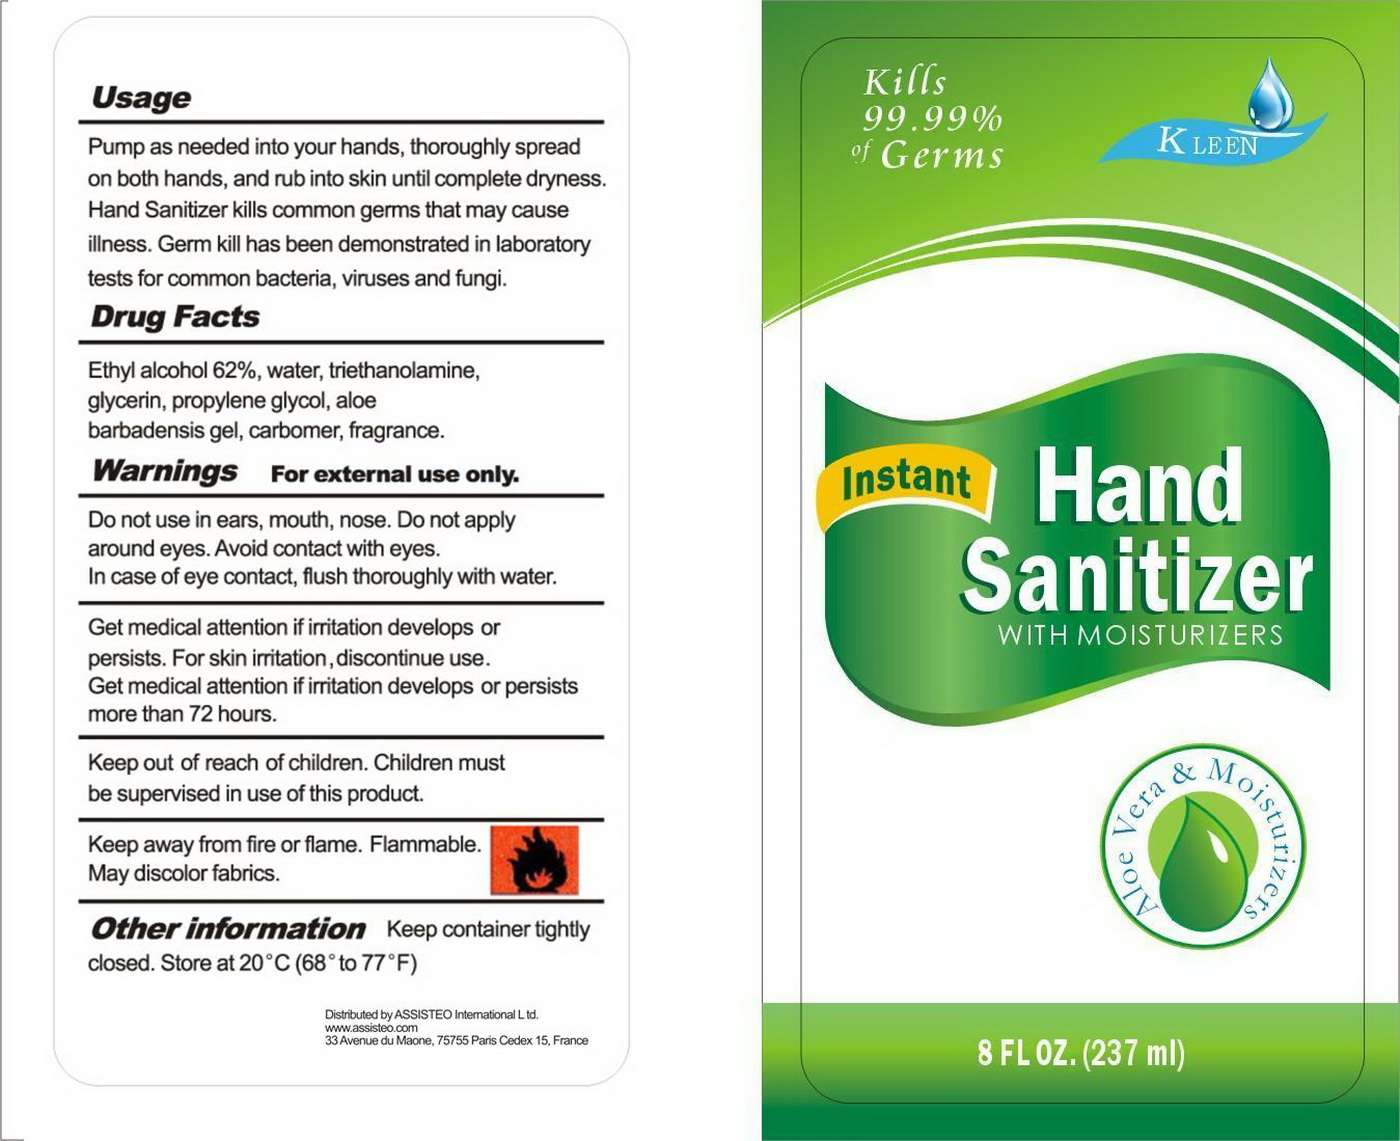 Kleen Instant Hand Sanitizer with Moisturizers